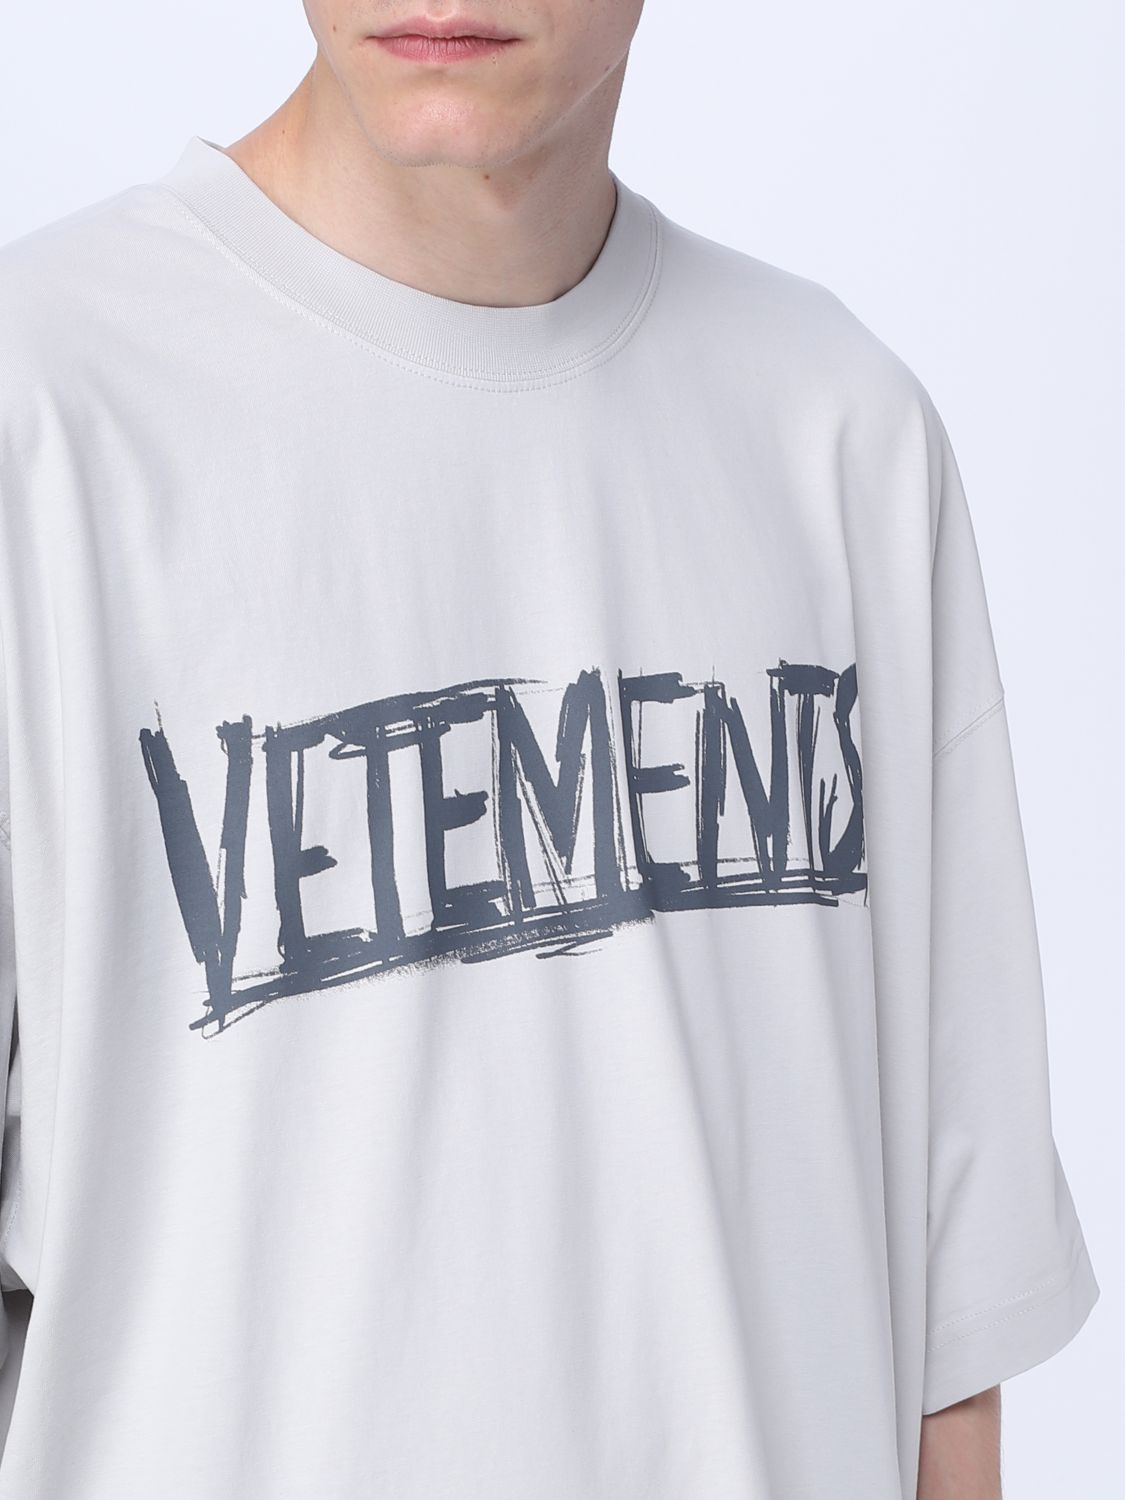 VETEMENTS STAFF ベーシック ロゴ Tシャツ L